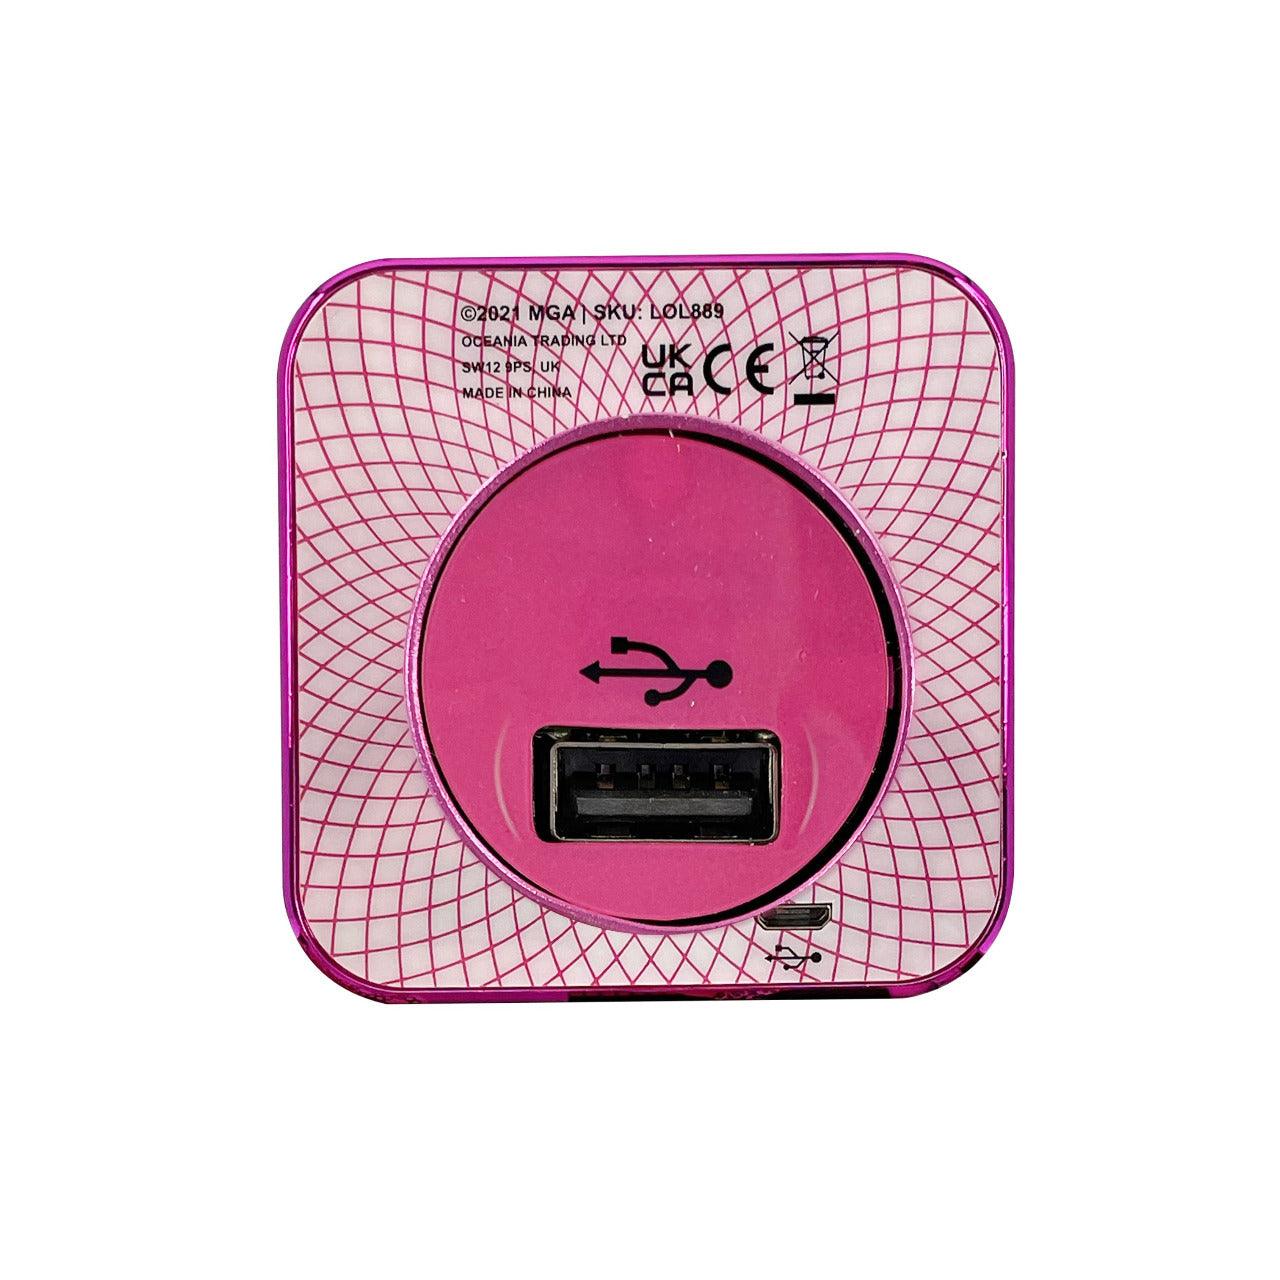 L.O.L. Suprise! My Diva Wireless Karaoke Microphone Pink - childrensheadphones.co.uk